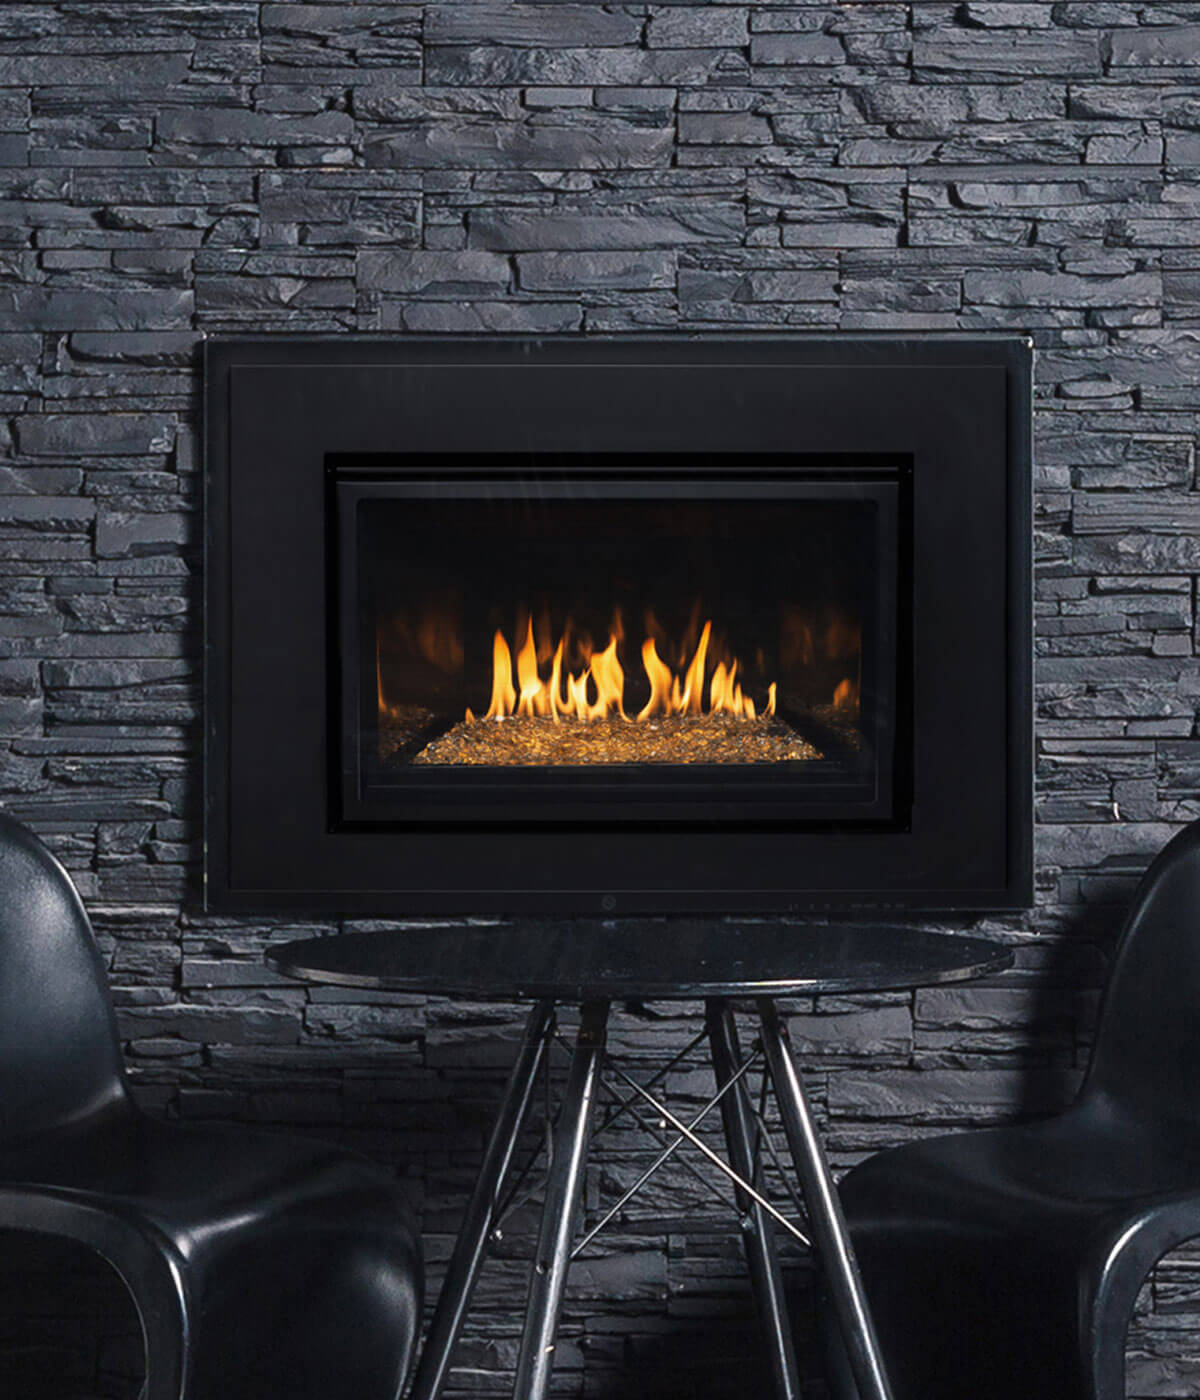 Montigo Illume fireplace insert 34FID with contemporary burner and 4 sided oversized surround